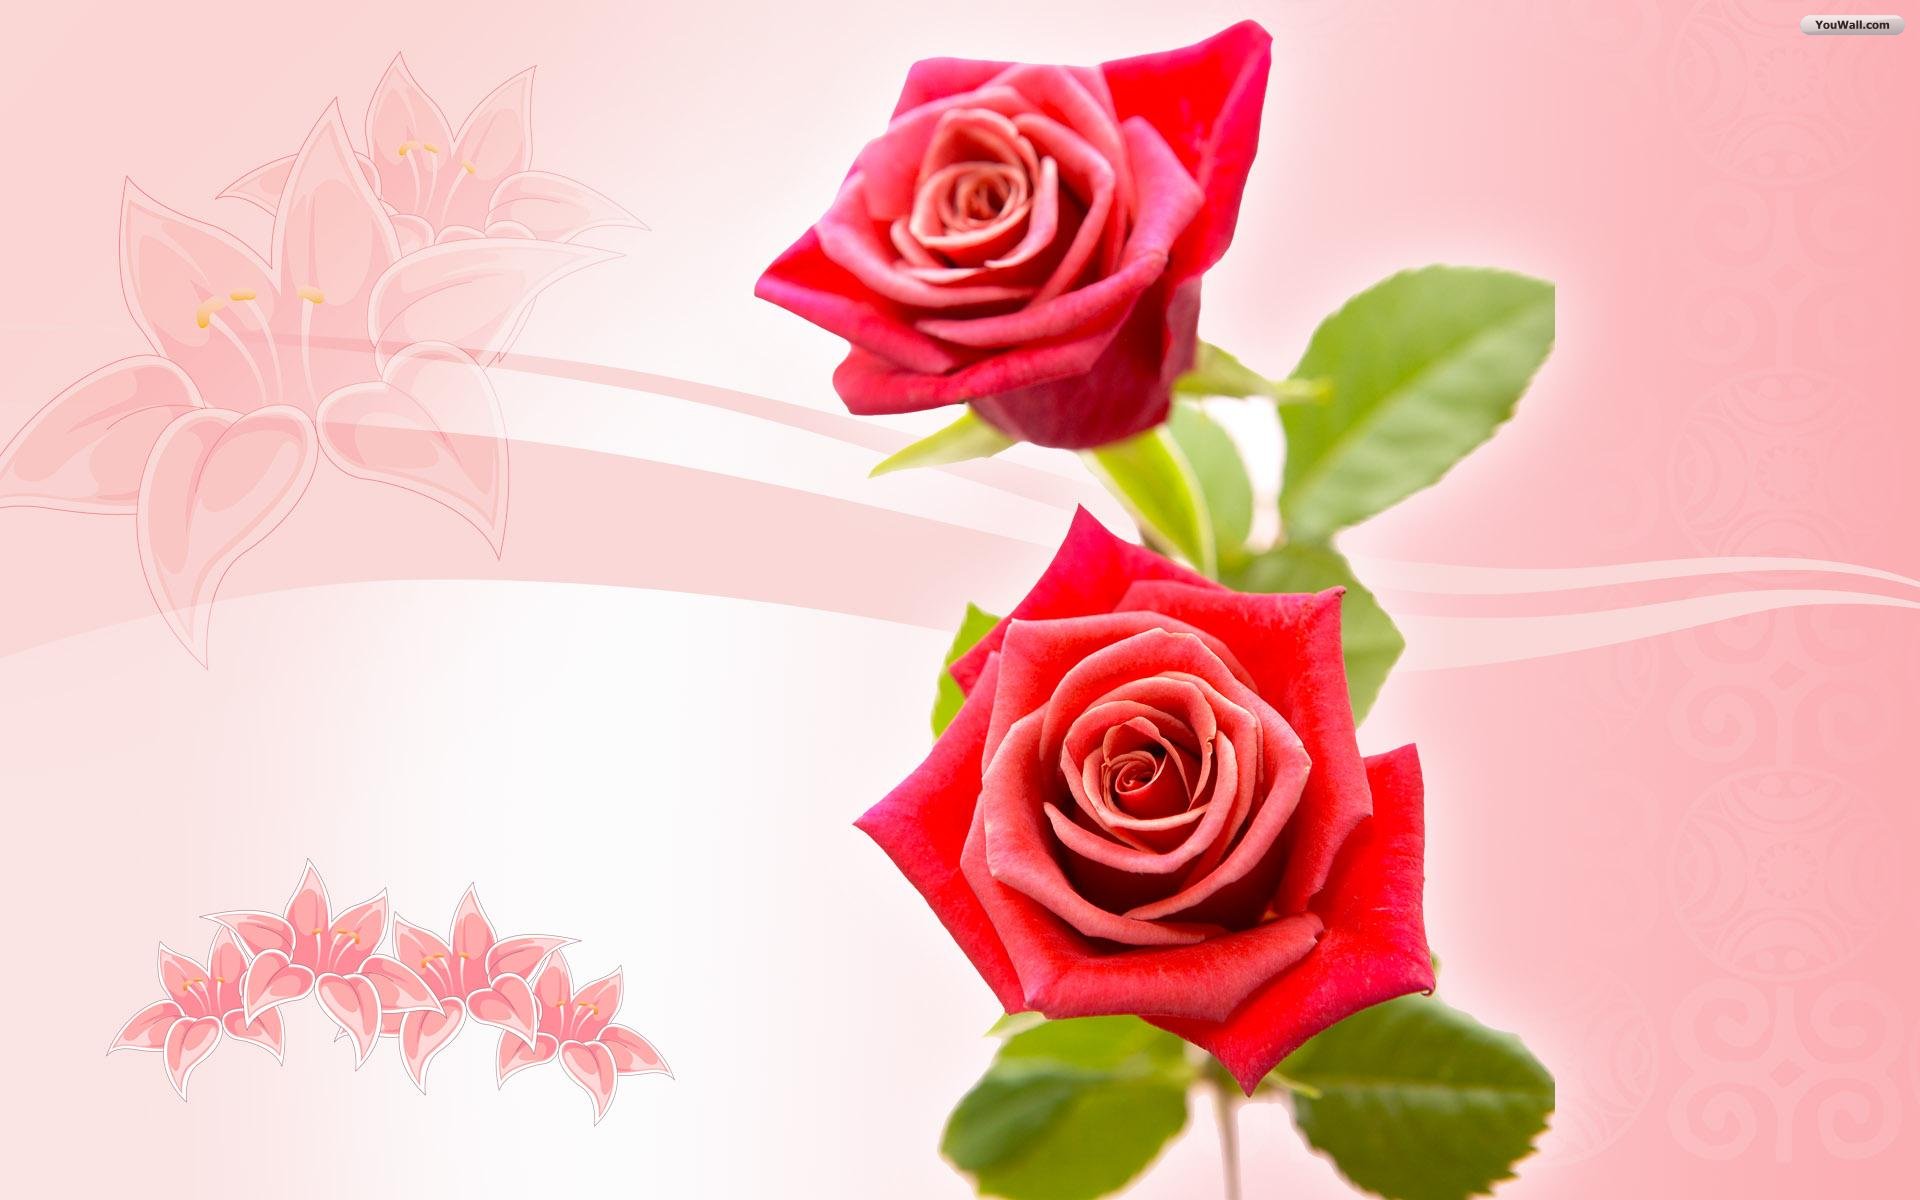 Rose Wallpaper Photos Roses For Desktop